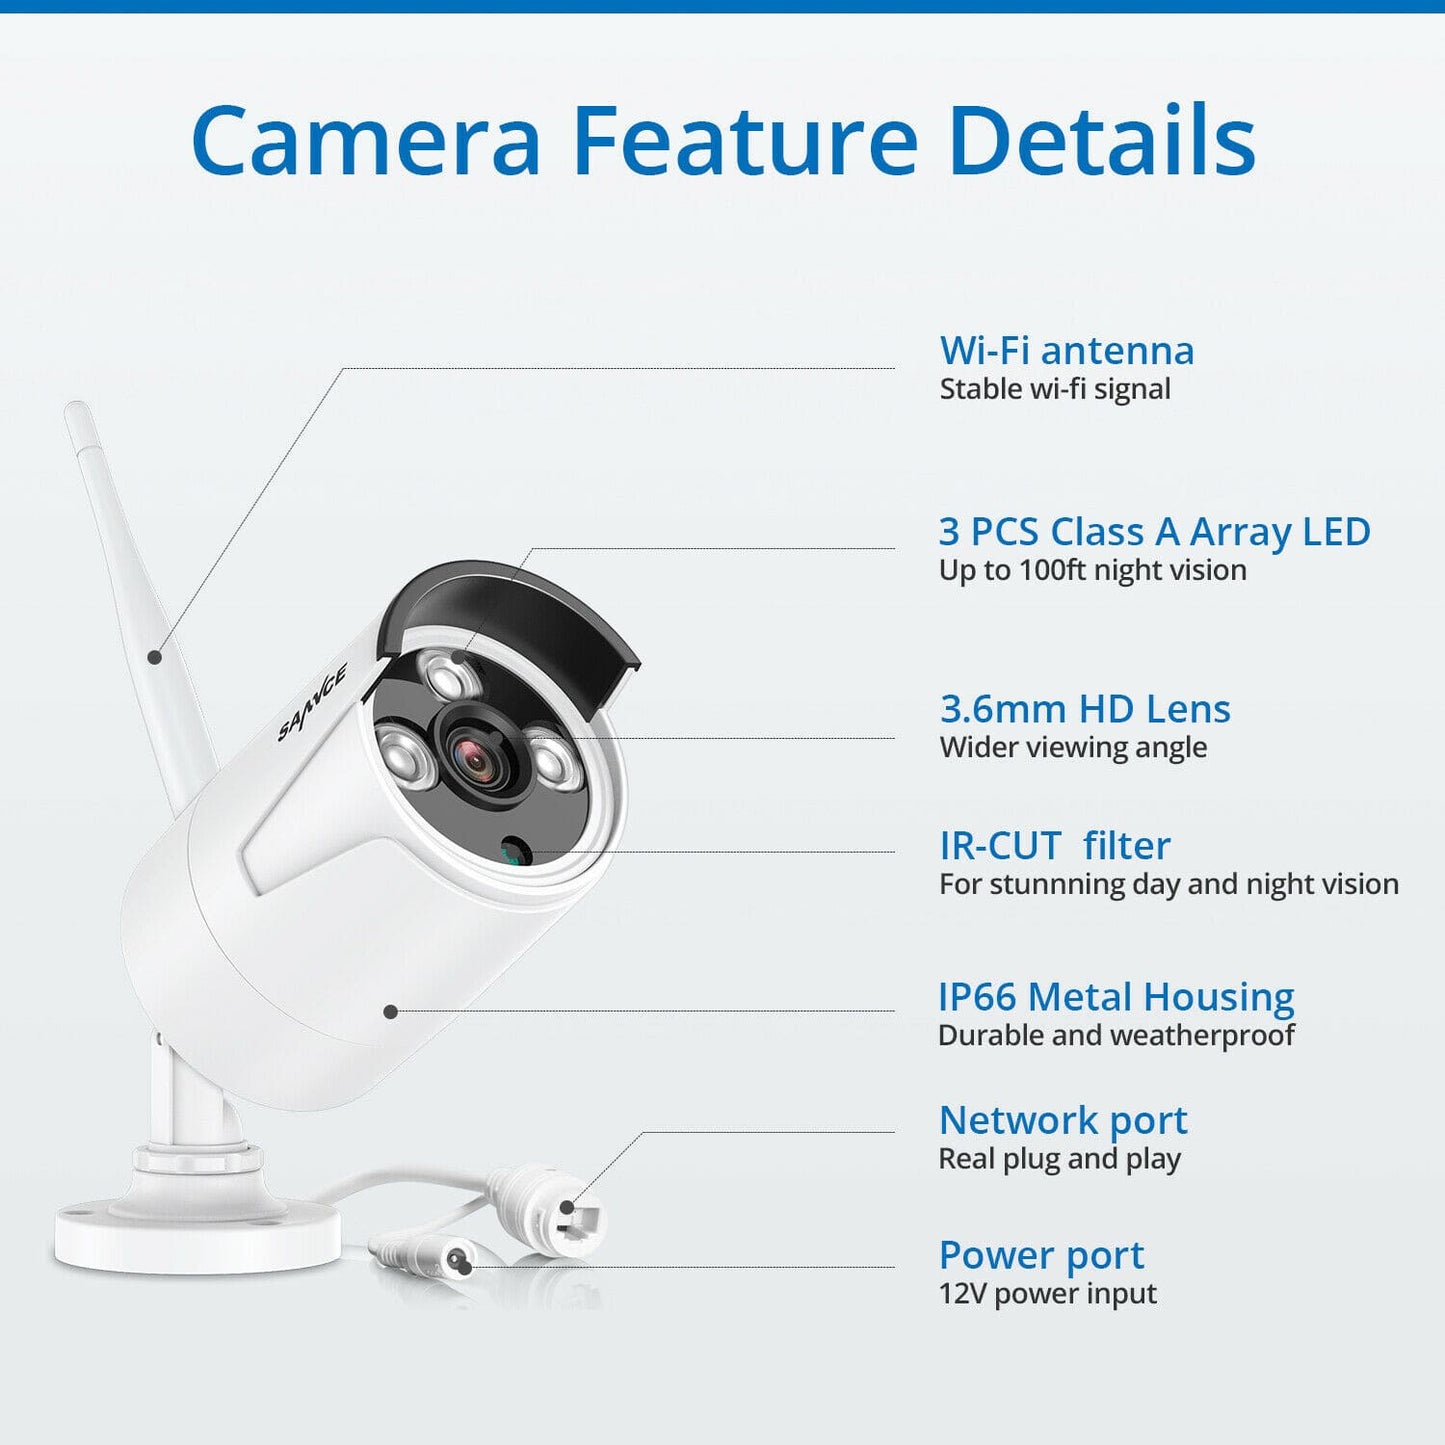 SANNCE - 8CH Security Camera System -  NVR HD 1080P Security IP Camera System - CCTV IR Night Vision